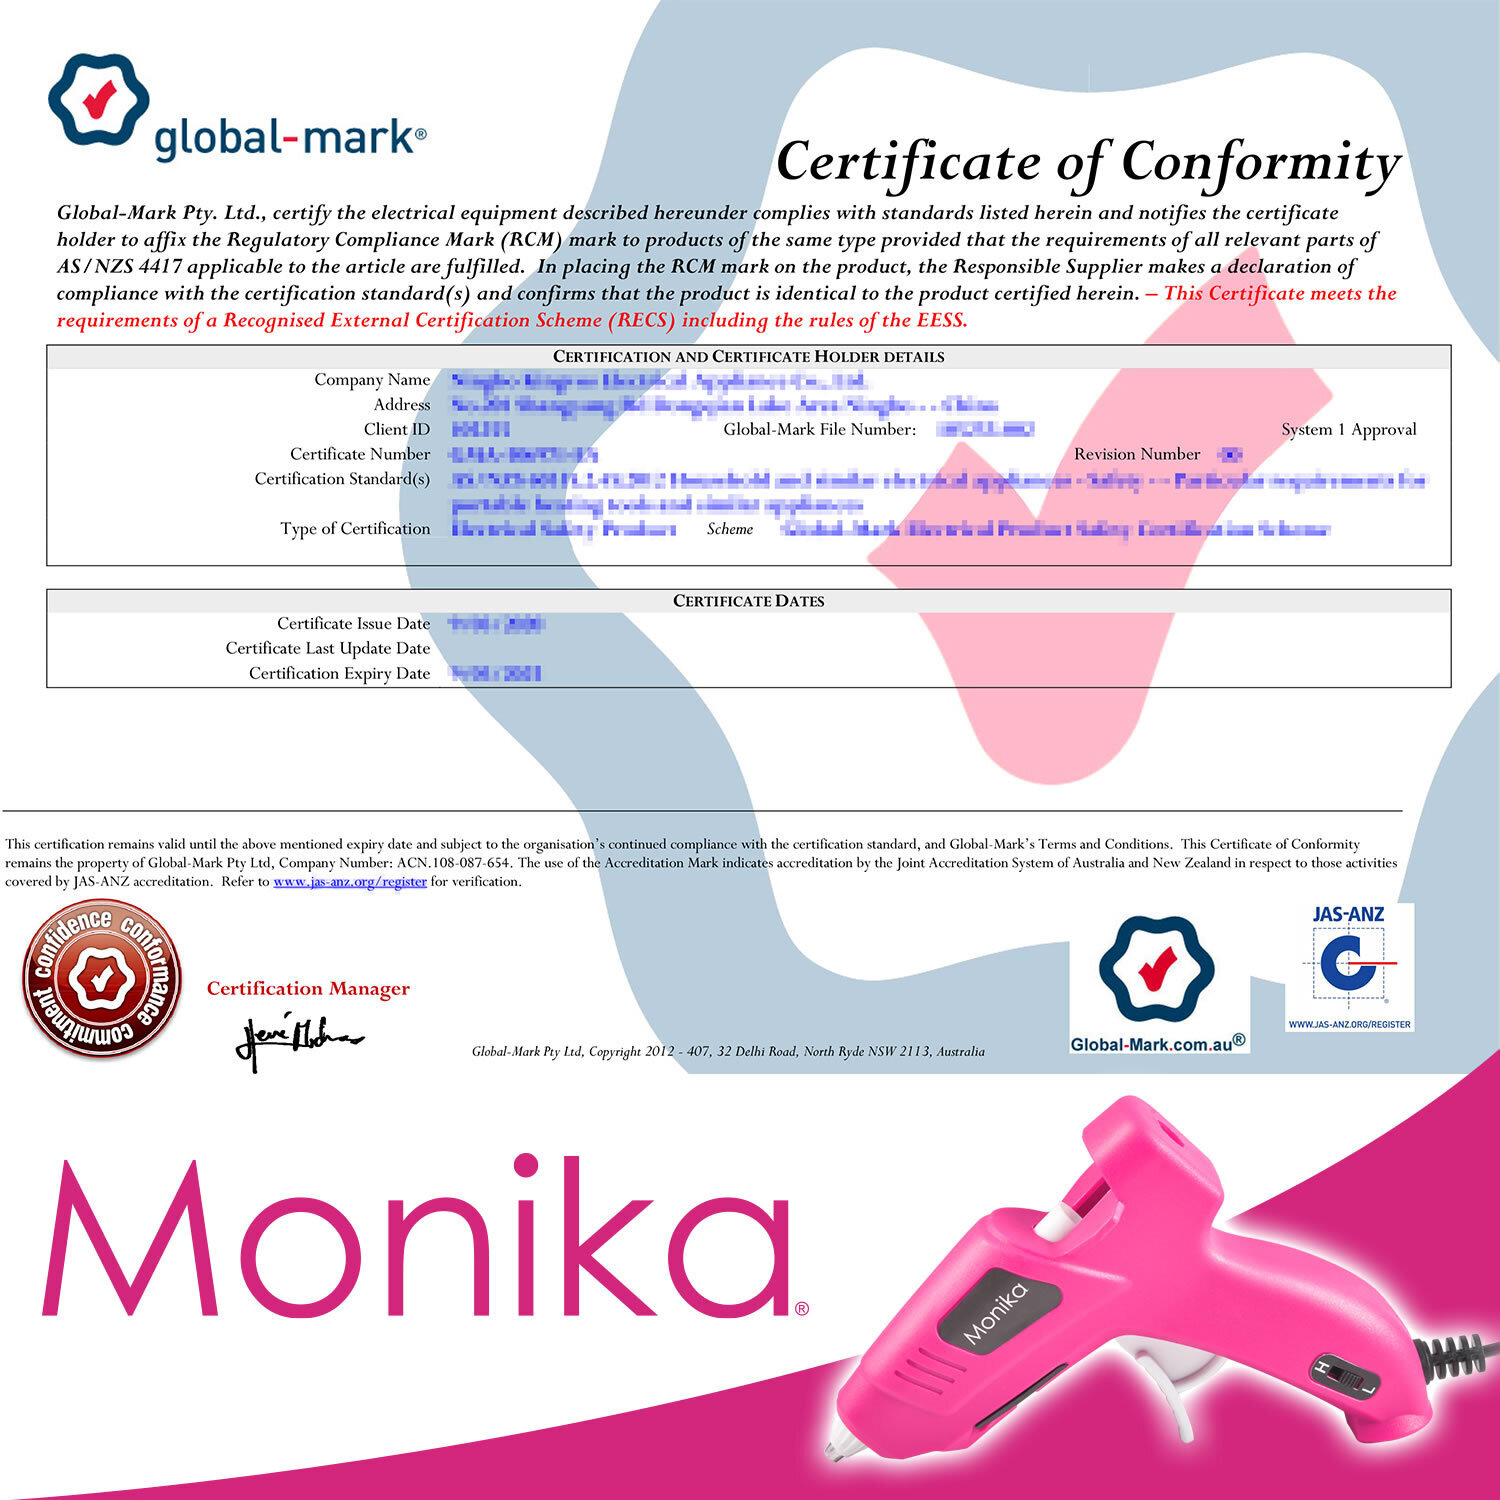 Monika 159PCS Pink Tool Kit Portable Household Tool Set Dual Temp